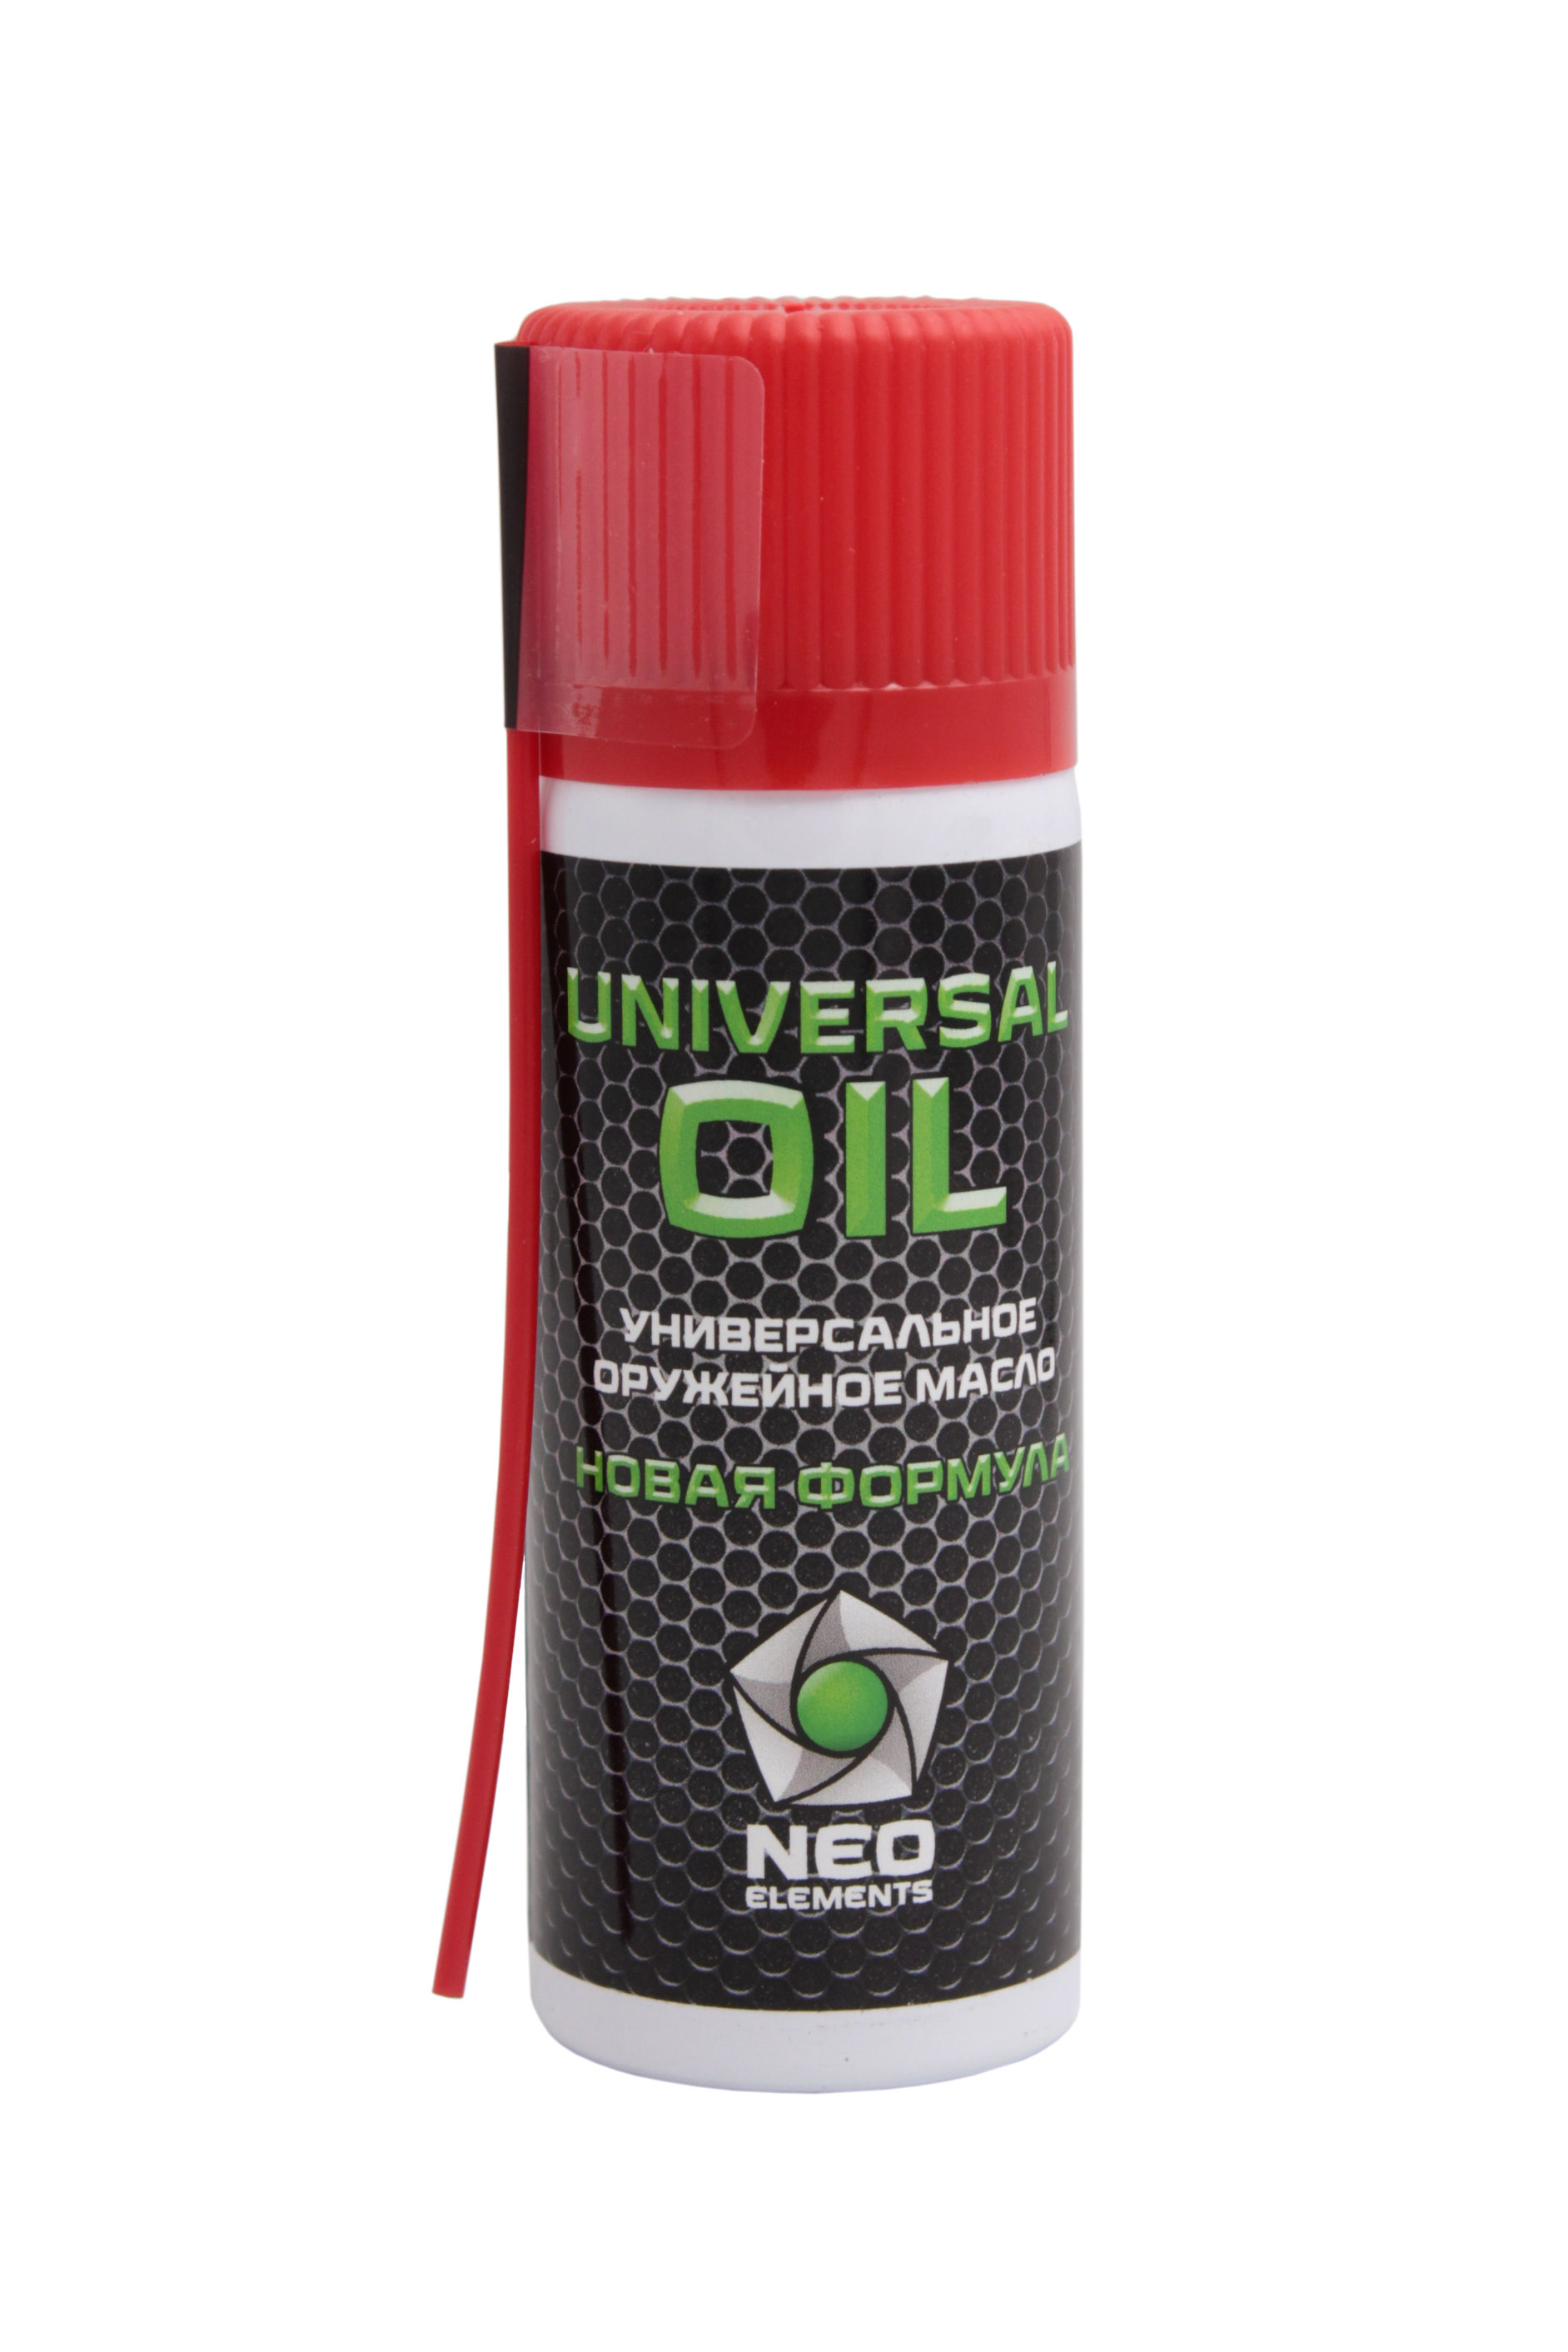 Масло Neo Elements Universal oil оружейное 75мл - фото 1